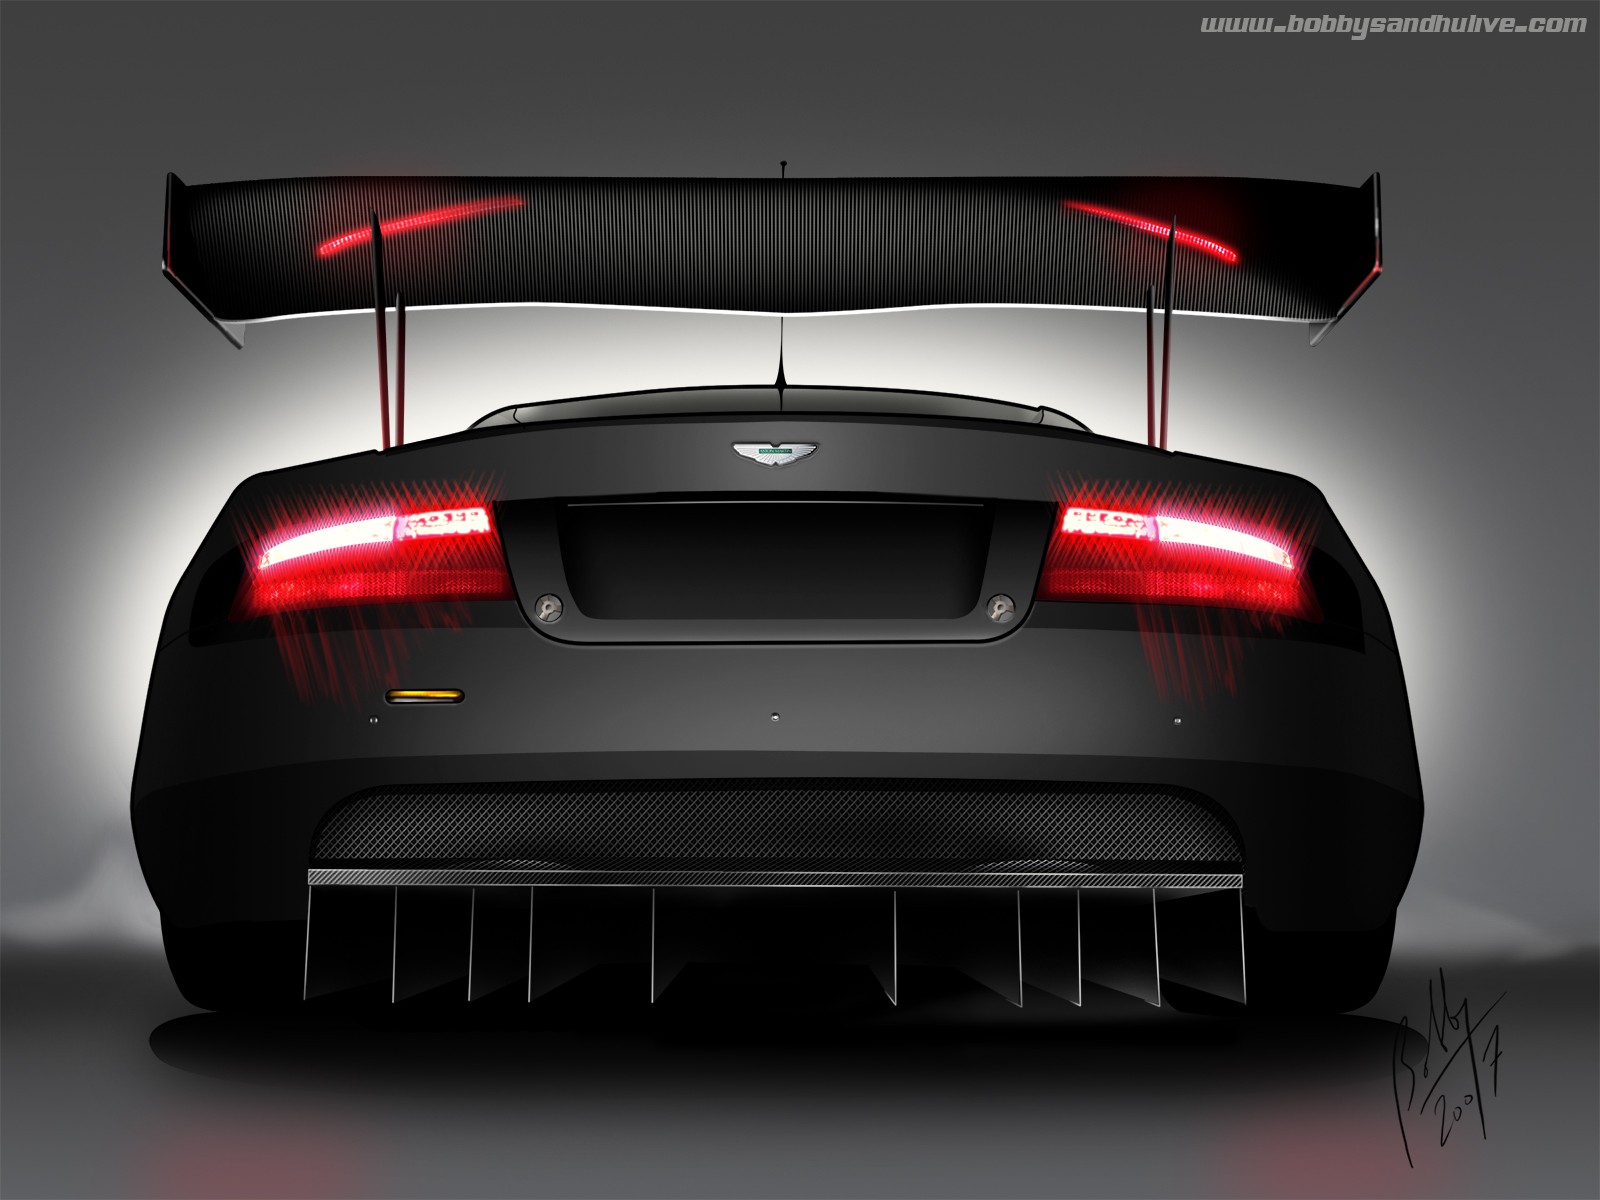 General 1600x1200 car vehicle black cars Aston Martin British cars car spoiler rear wing